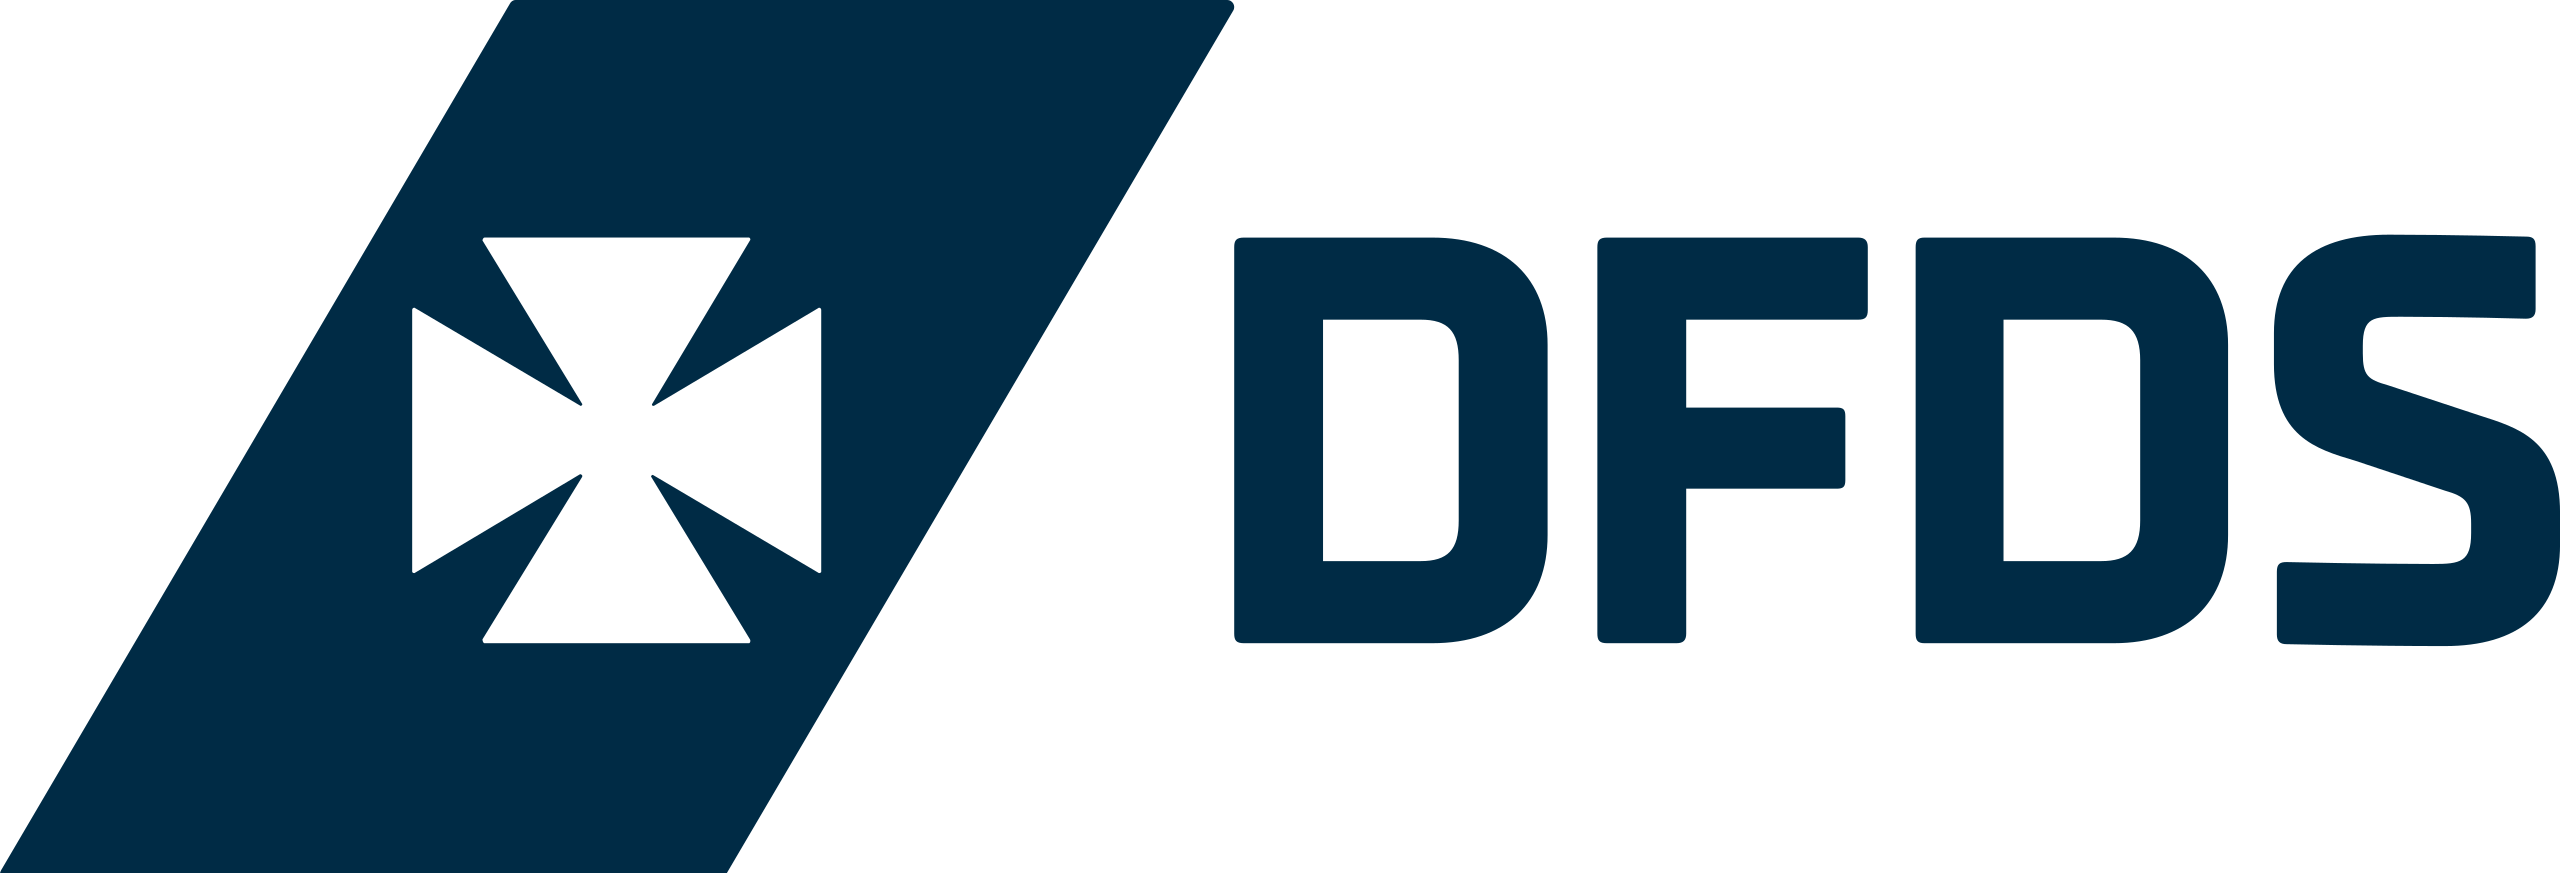 DFDS_logo_2015.svg